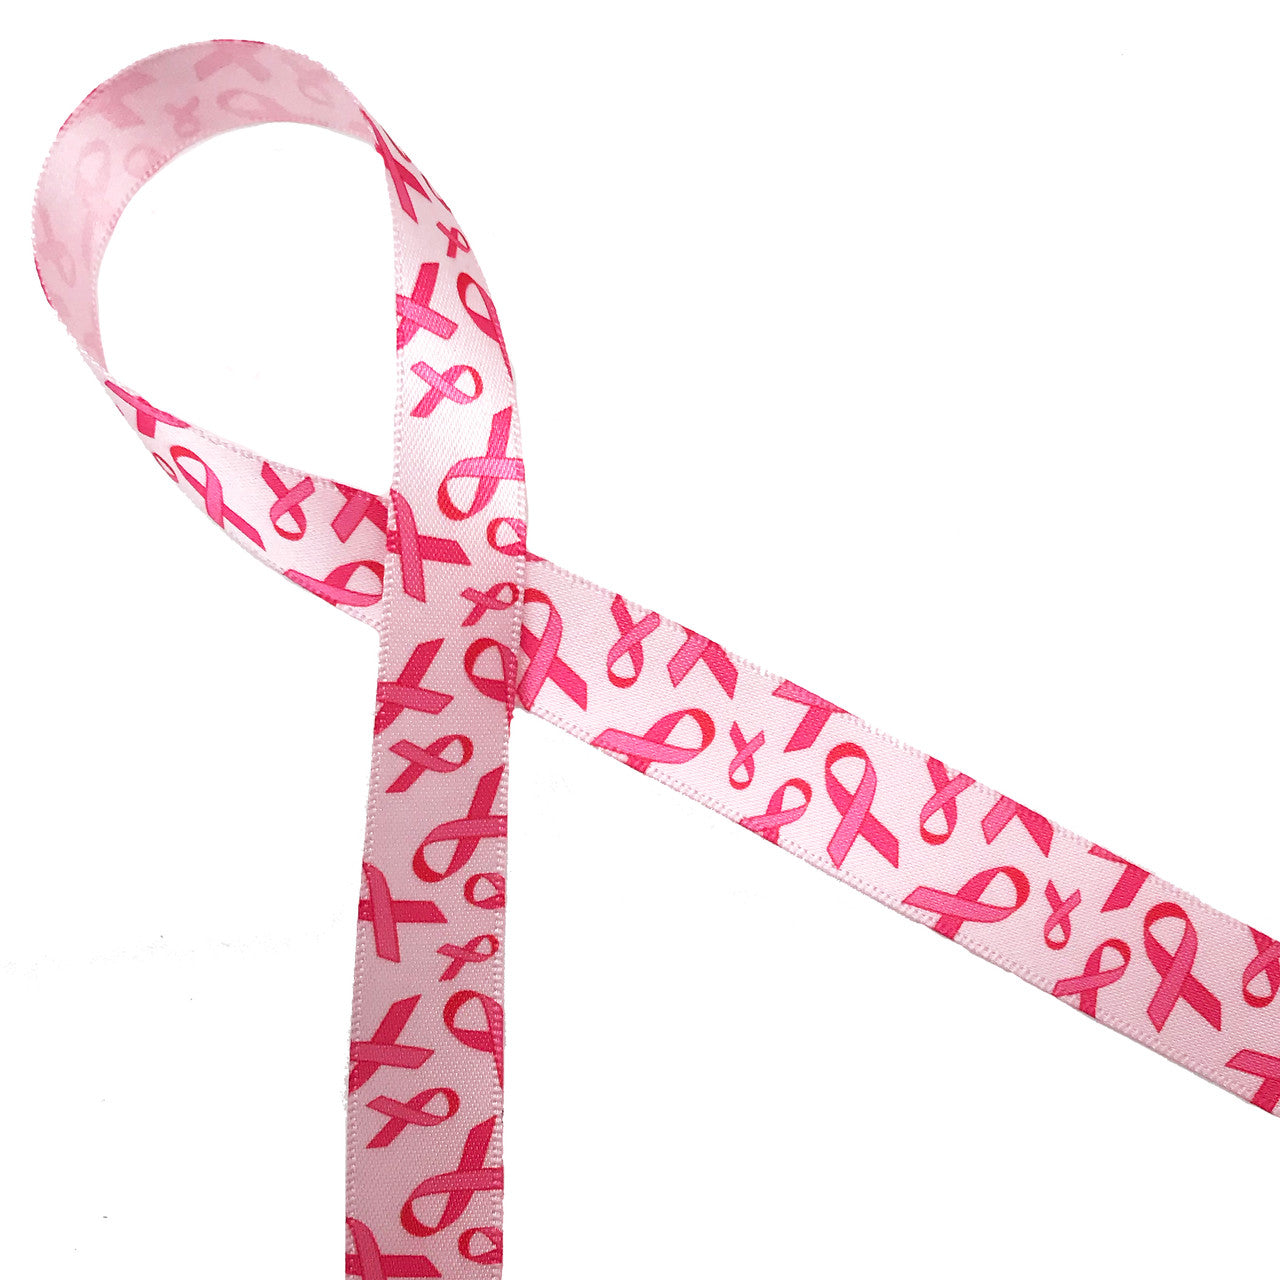 Breast Cancer Awareness ribbon printed on 5/8" pink single face satin